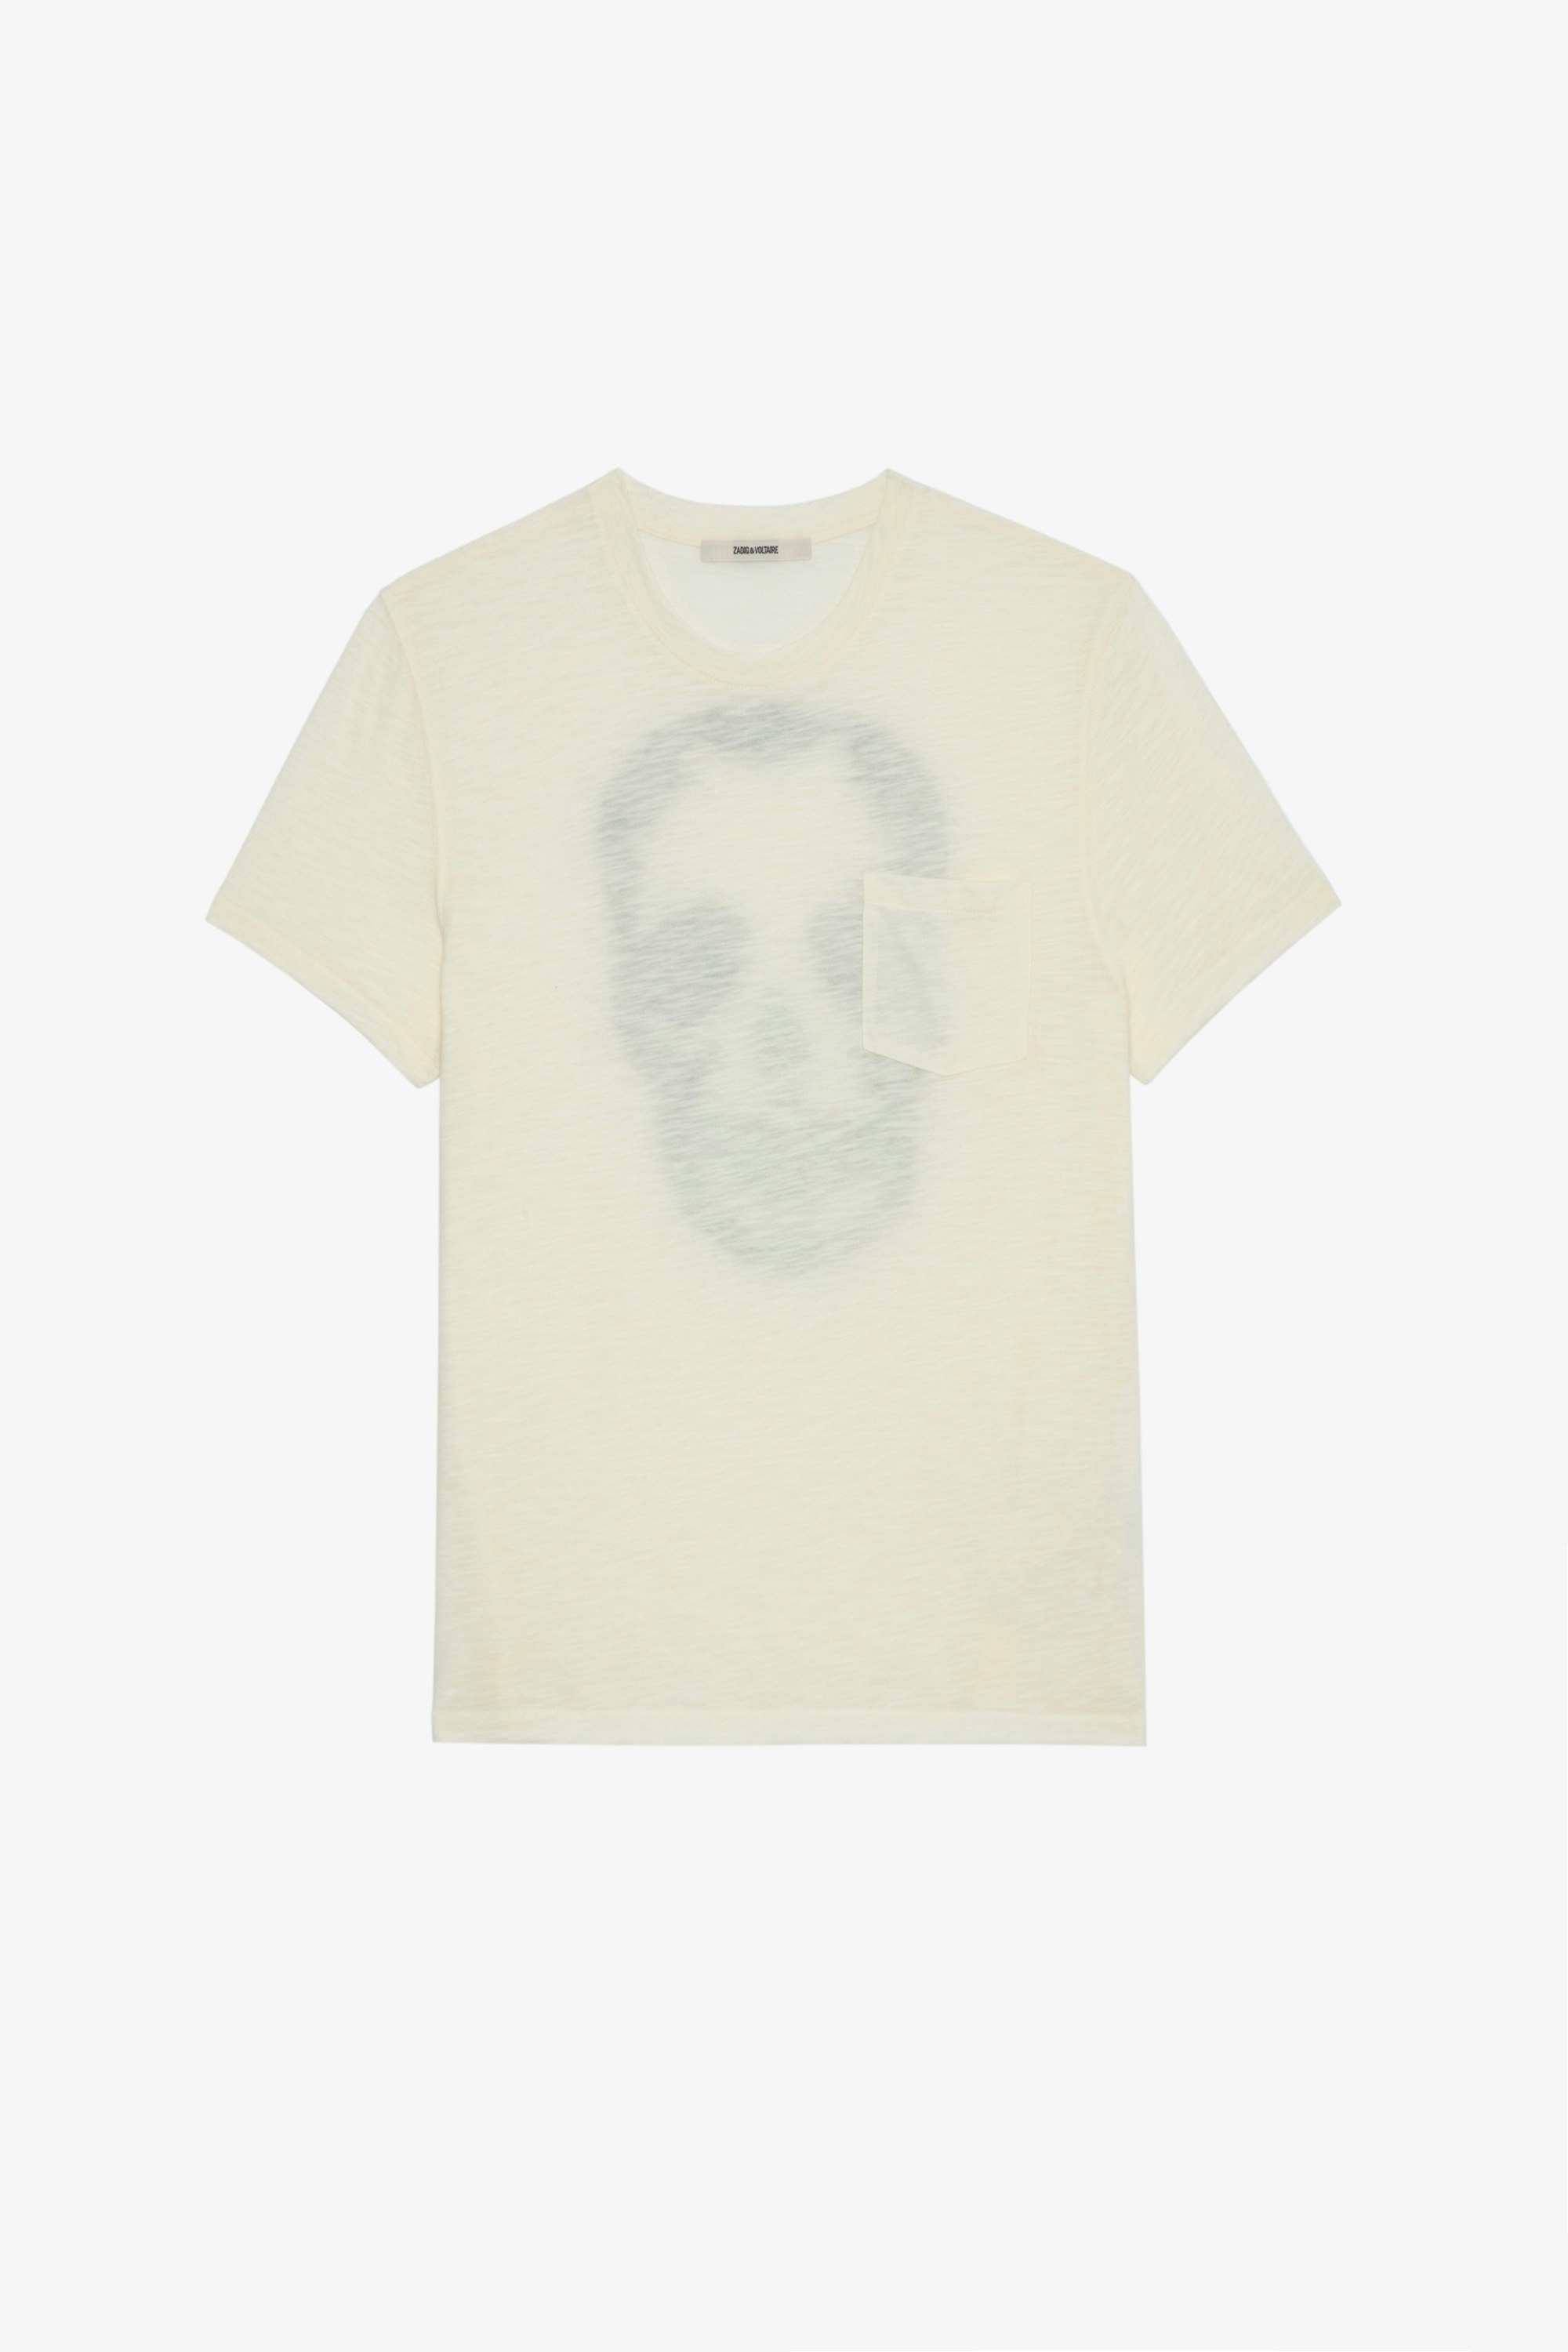 Stockholm Slub T-Shirt Men’s ecru slub cotton T-shirt with skull on back